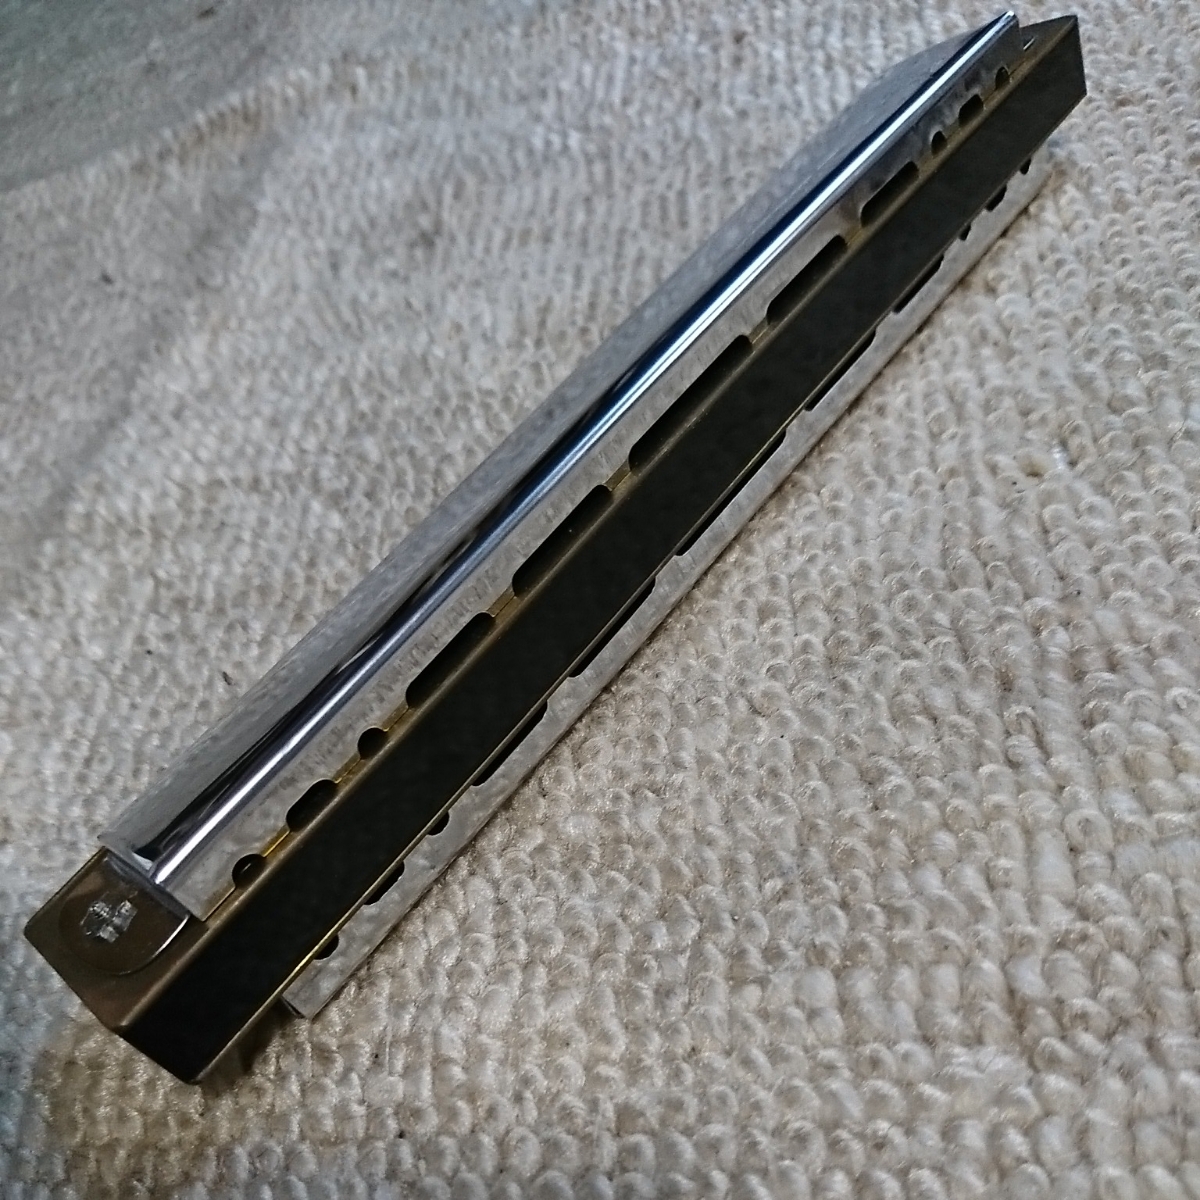  dragonfly band harmonica 26 made in Japan . sound harmonica Showa Retro used 